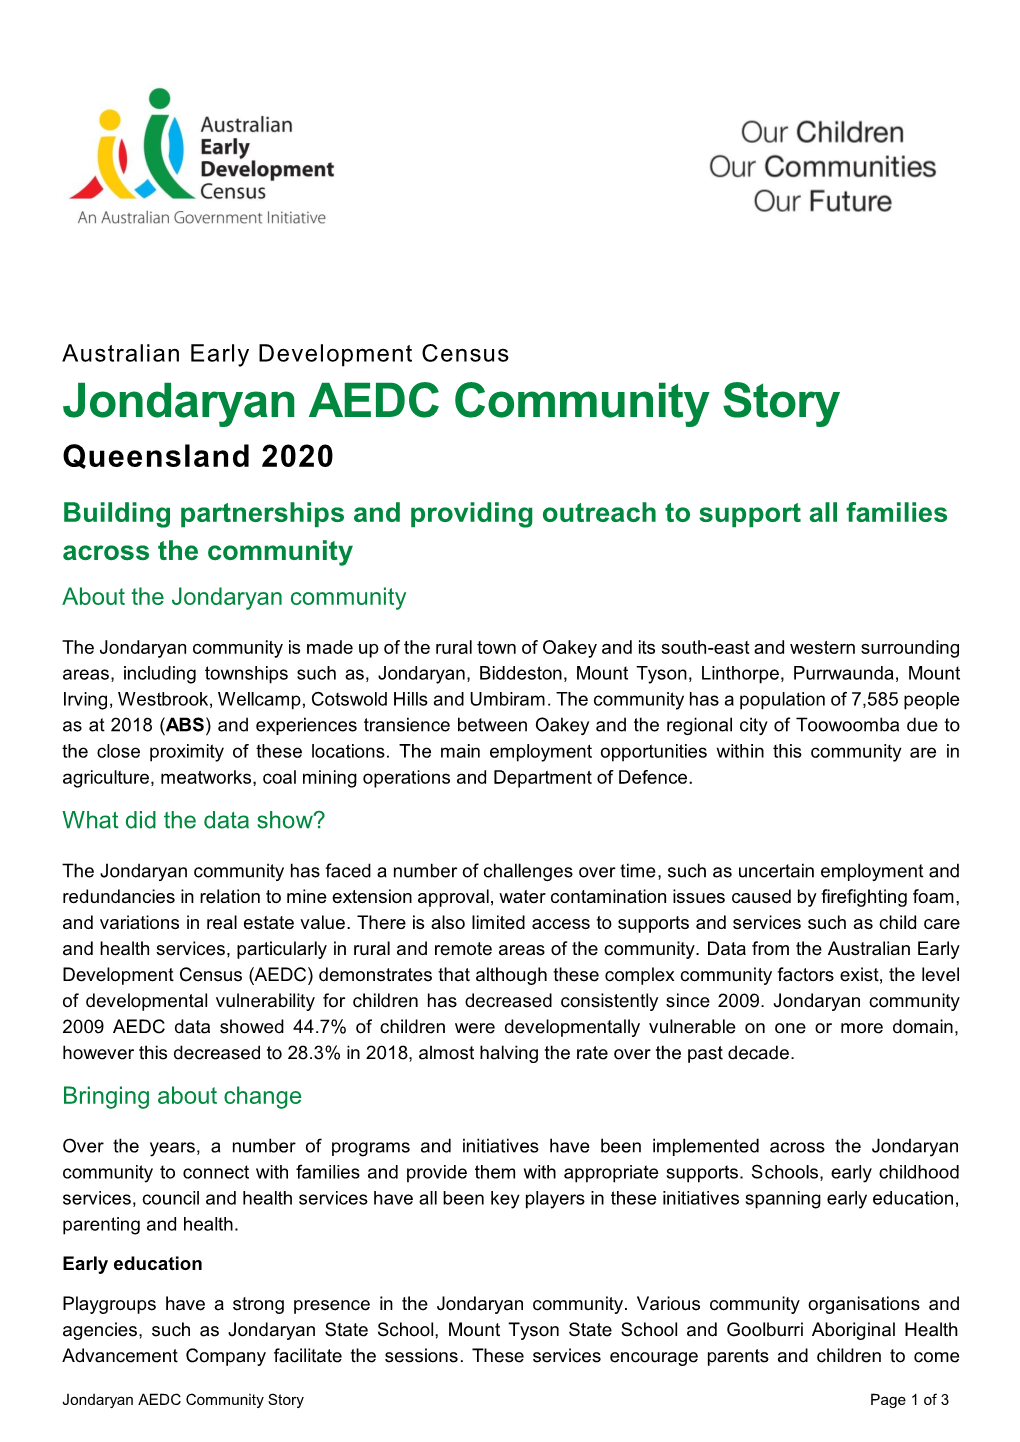 Jondaryan AEDC Community Story